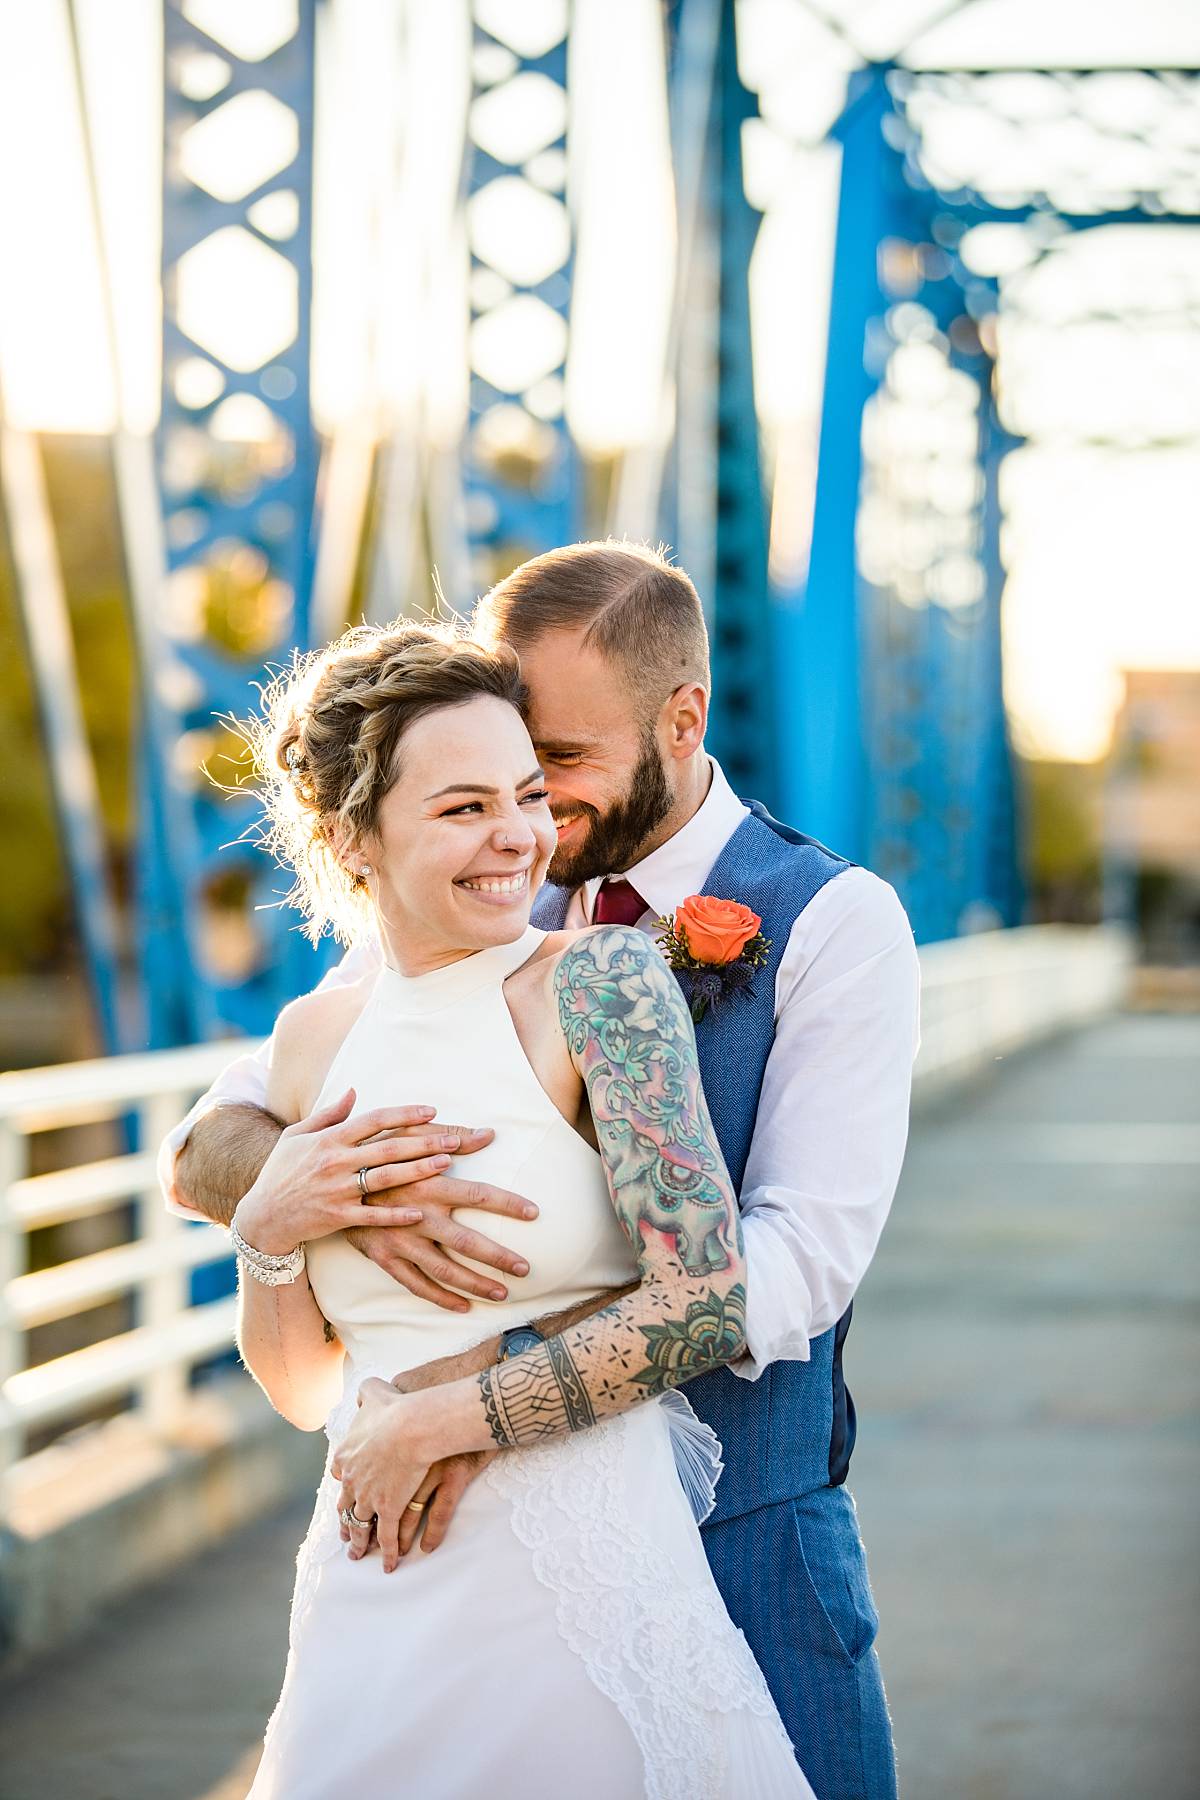 Wedding photographs at sunset on the Blue Bridge in Grand Rapids Michigan